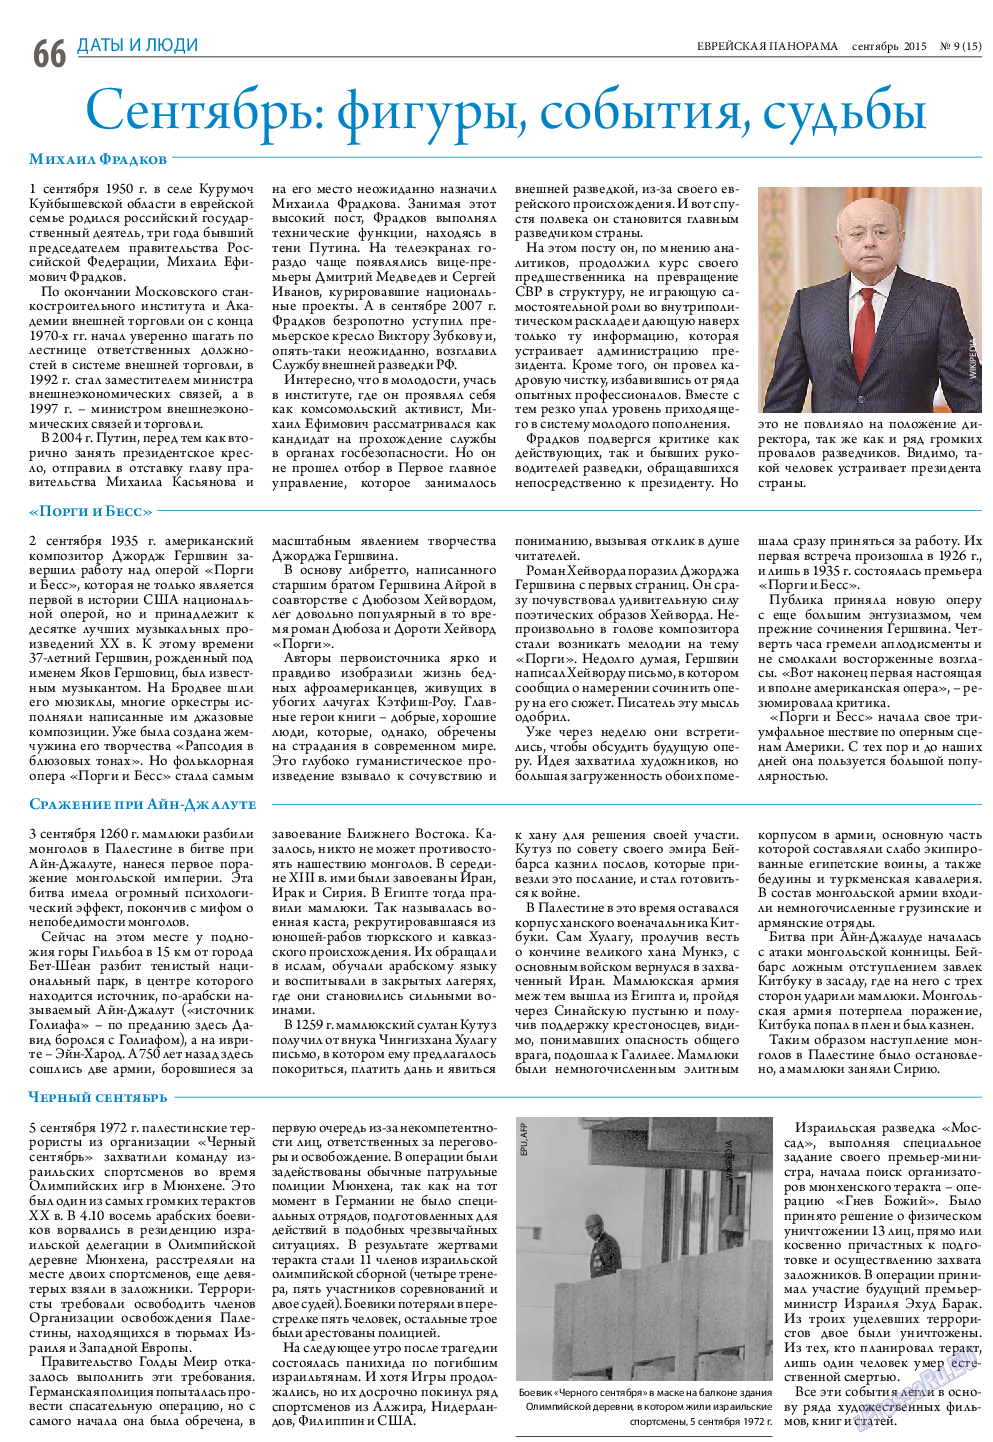 Еврейская панорама, газета. 2015 №9 стр.66